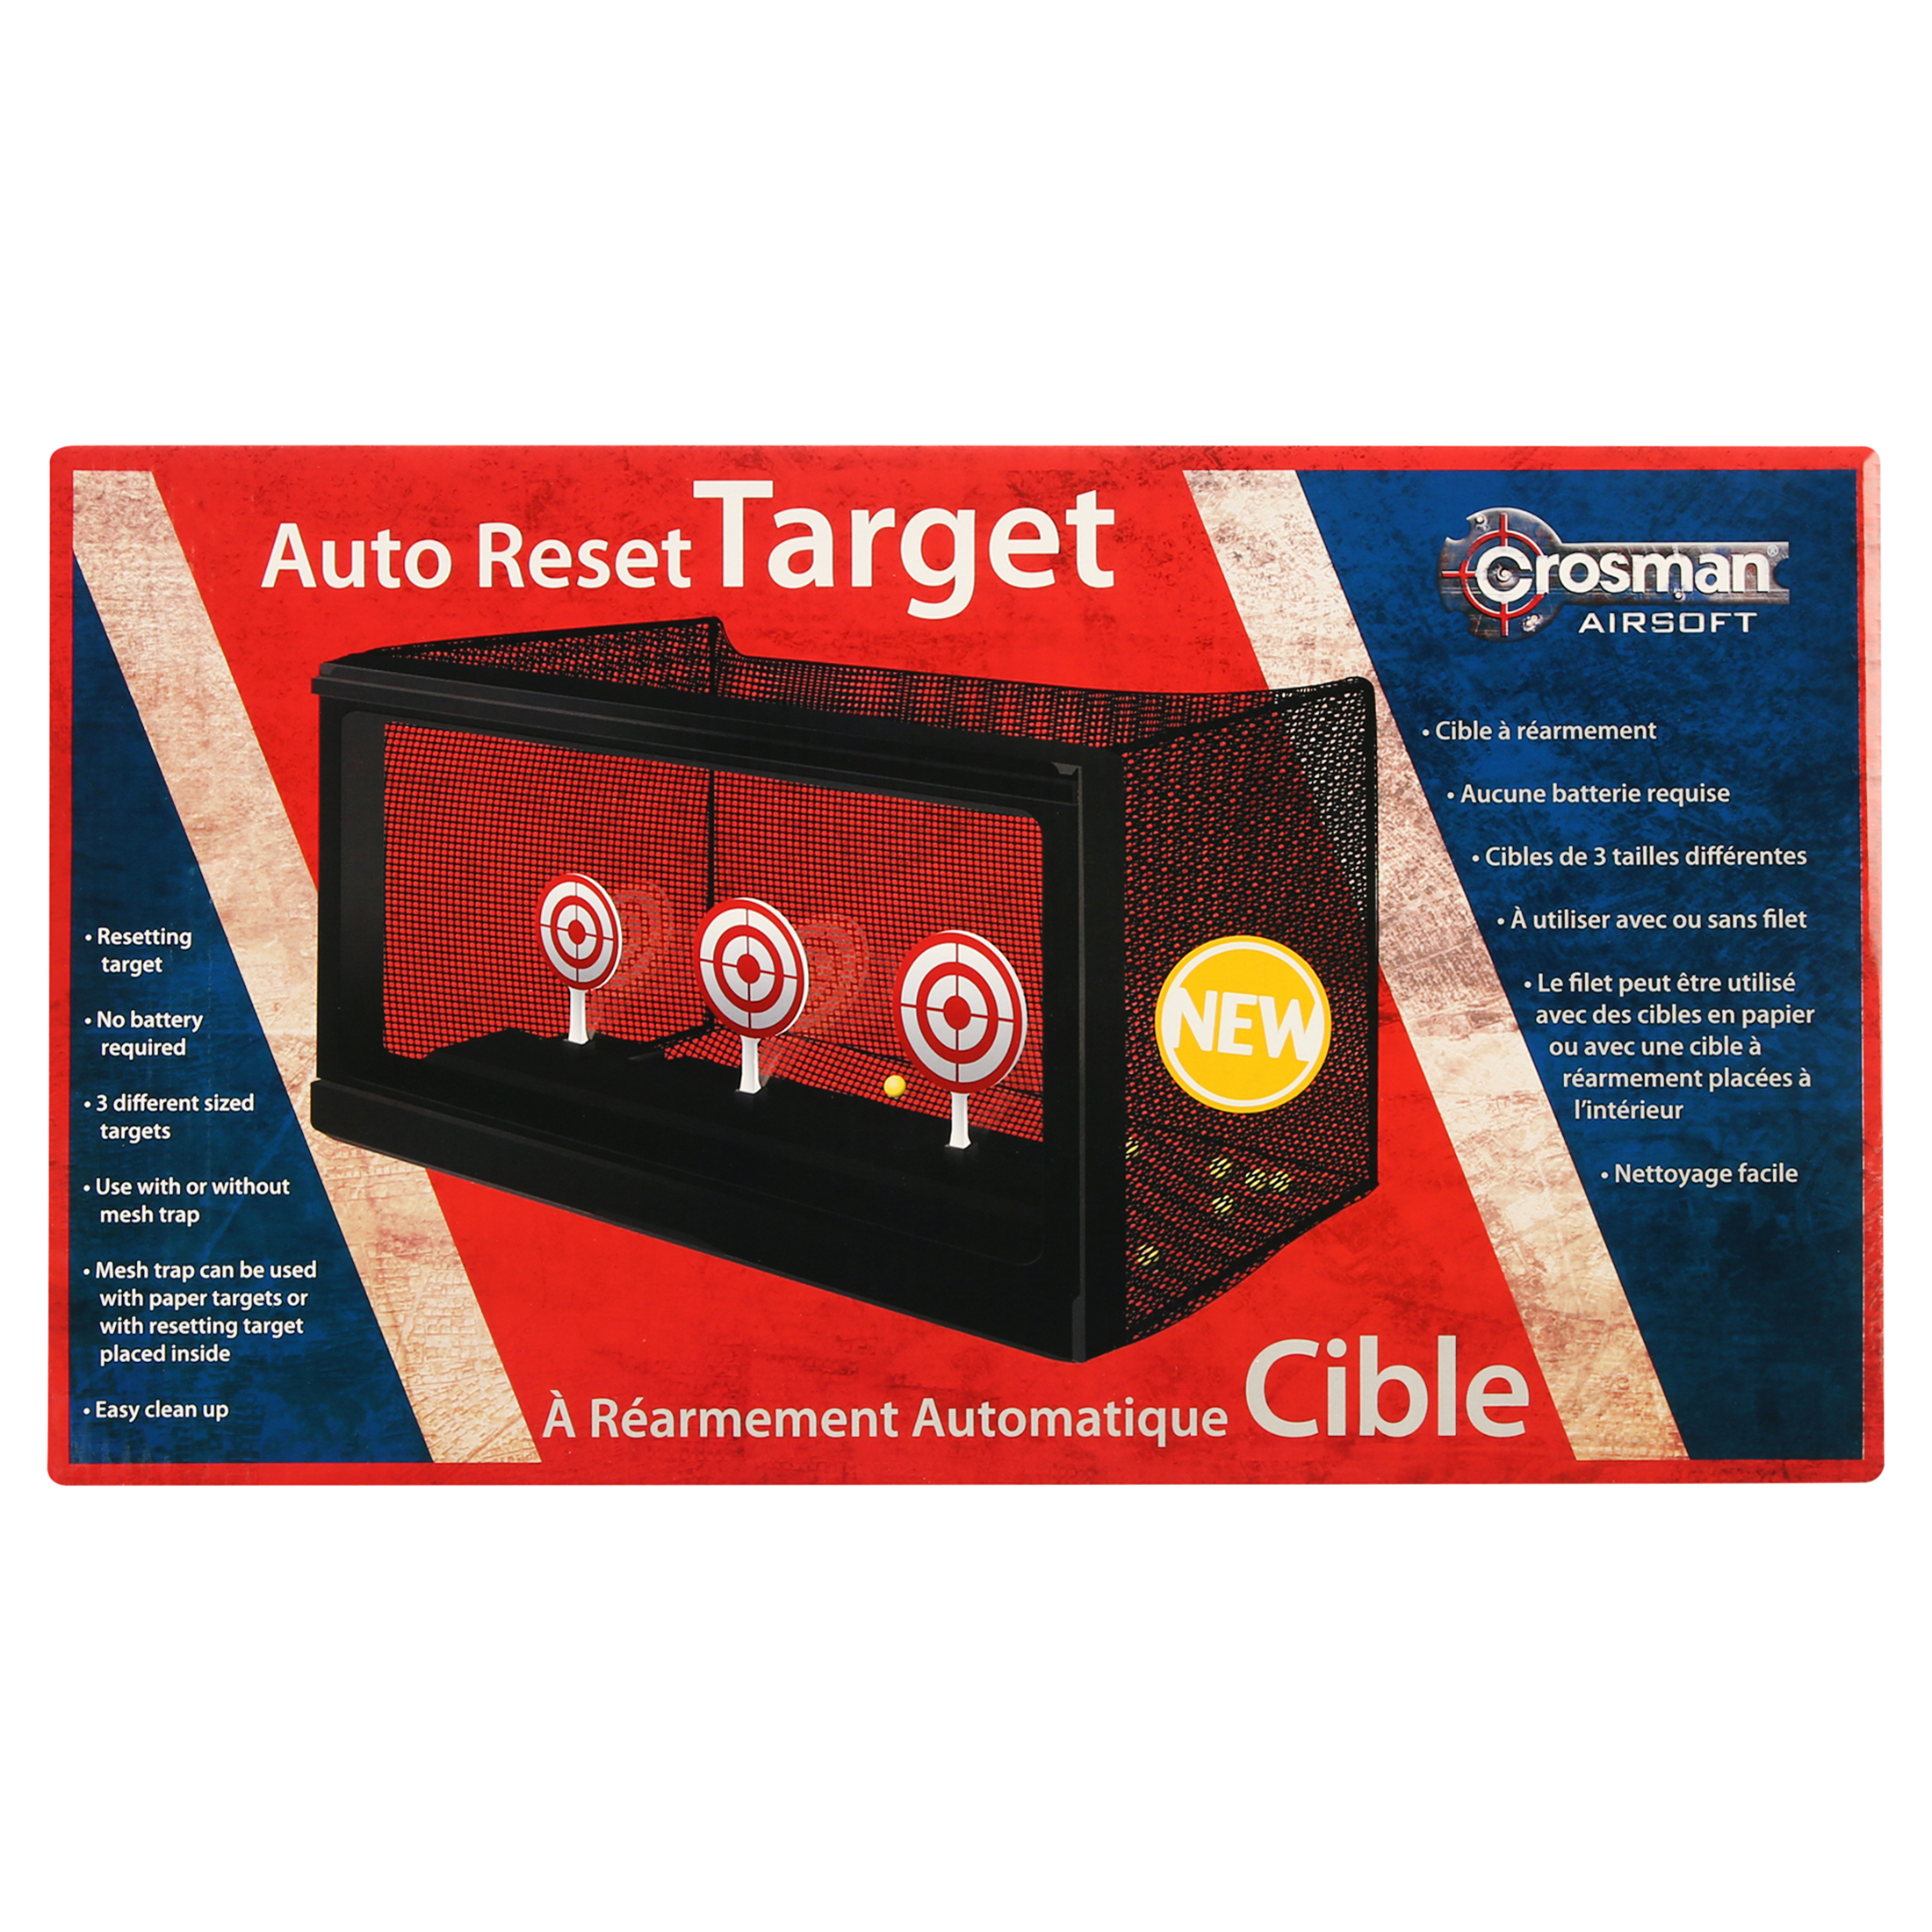 Crosman ASTLG Airsoft Auto Reset Target - image 3 of 9